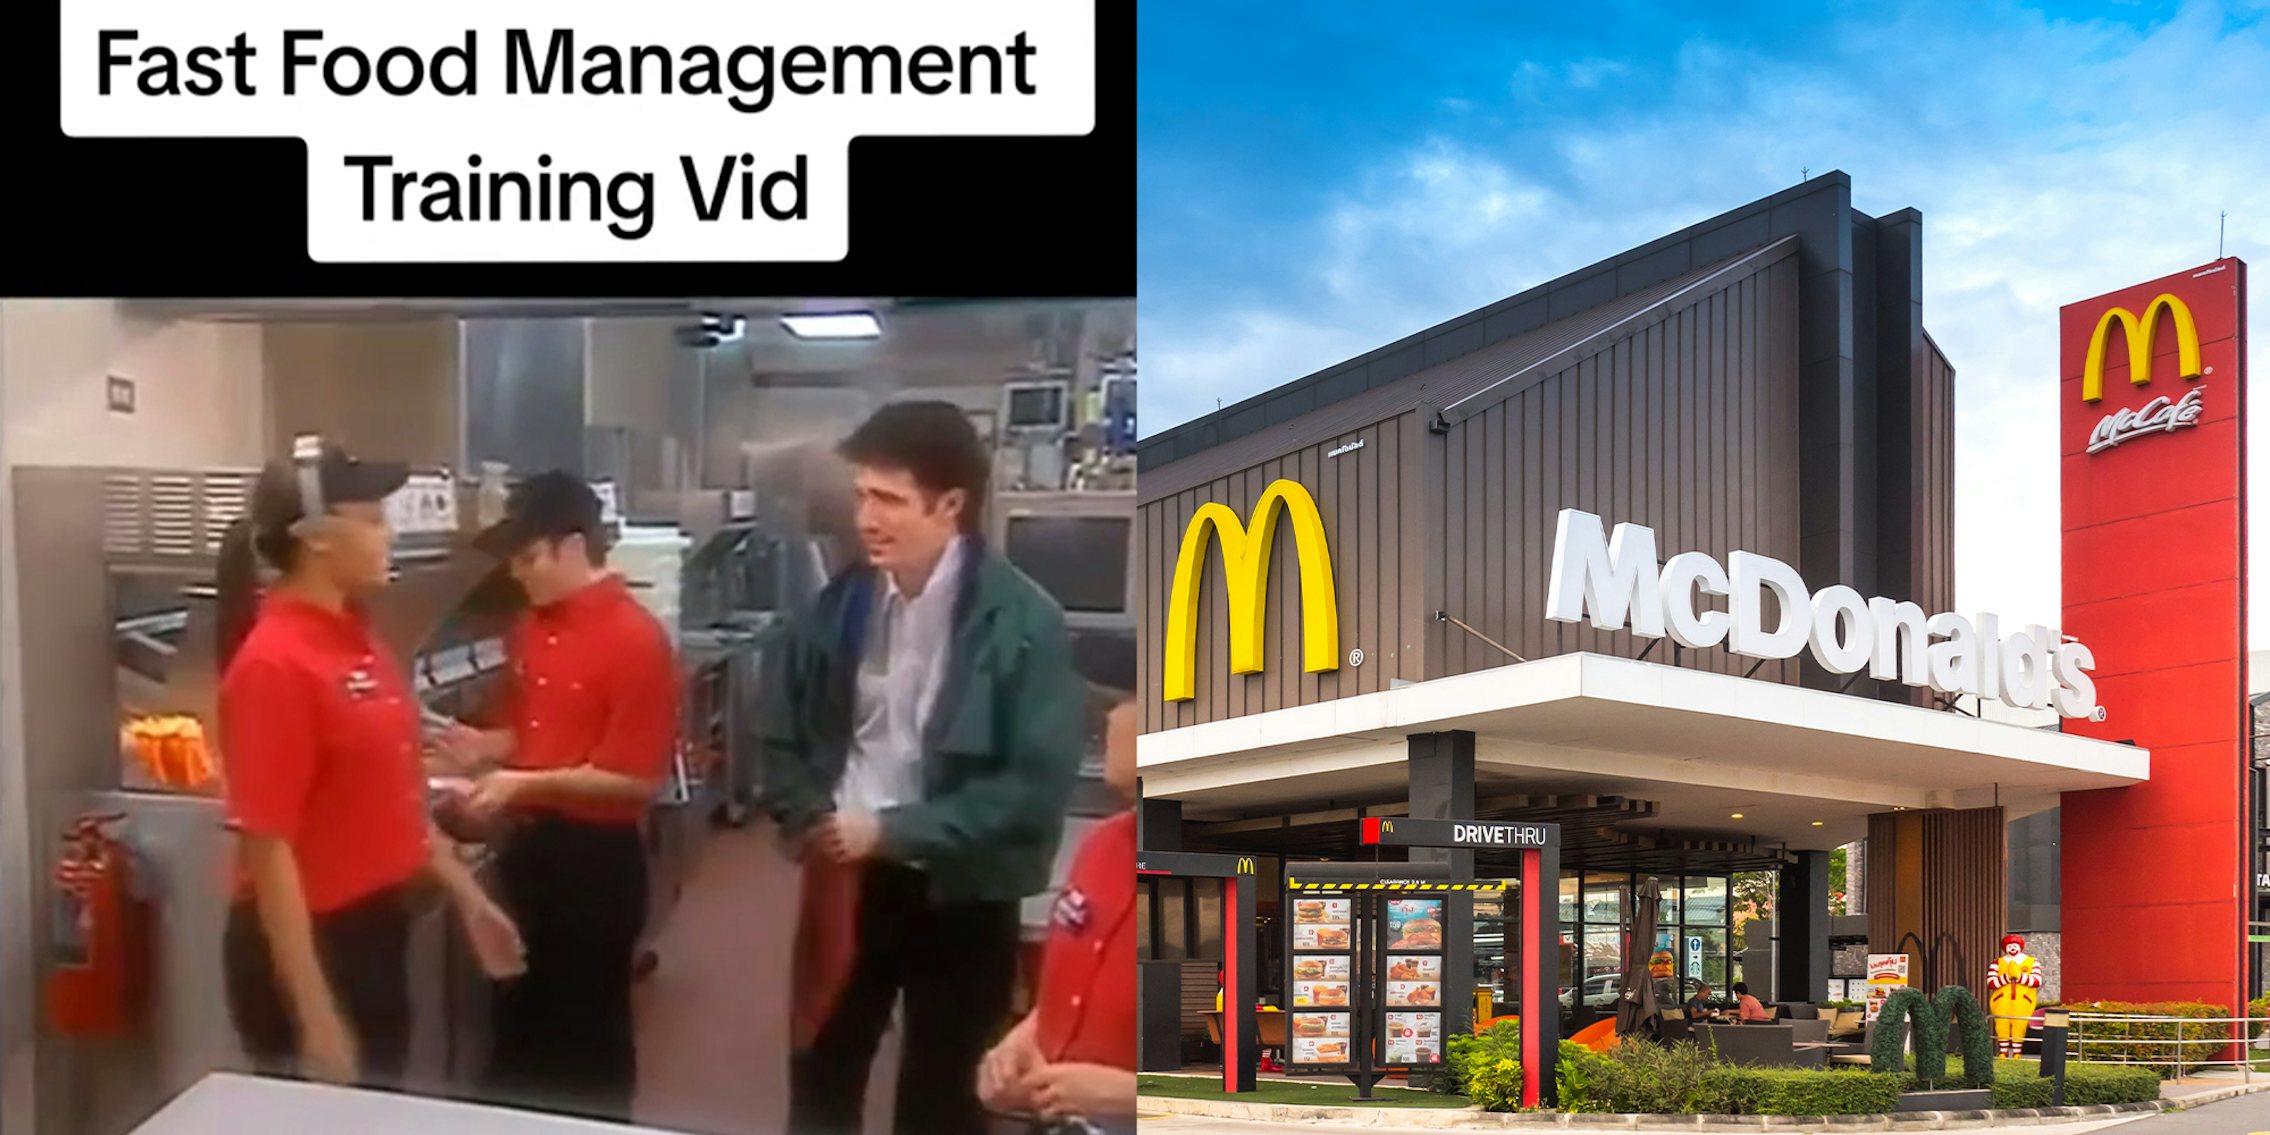 Old McDonald's management training video resurfaces